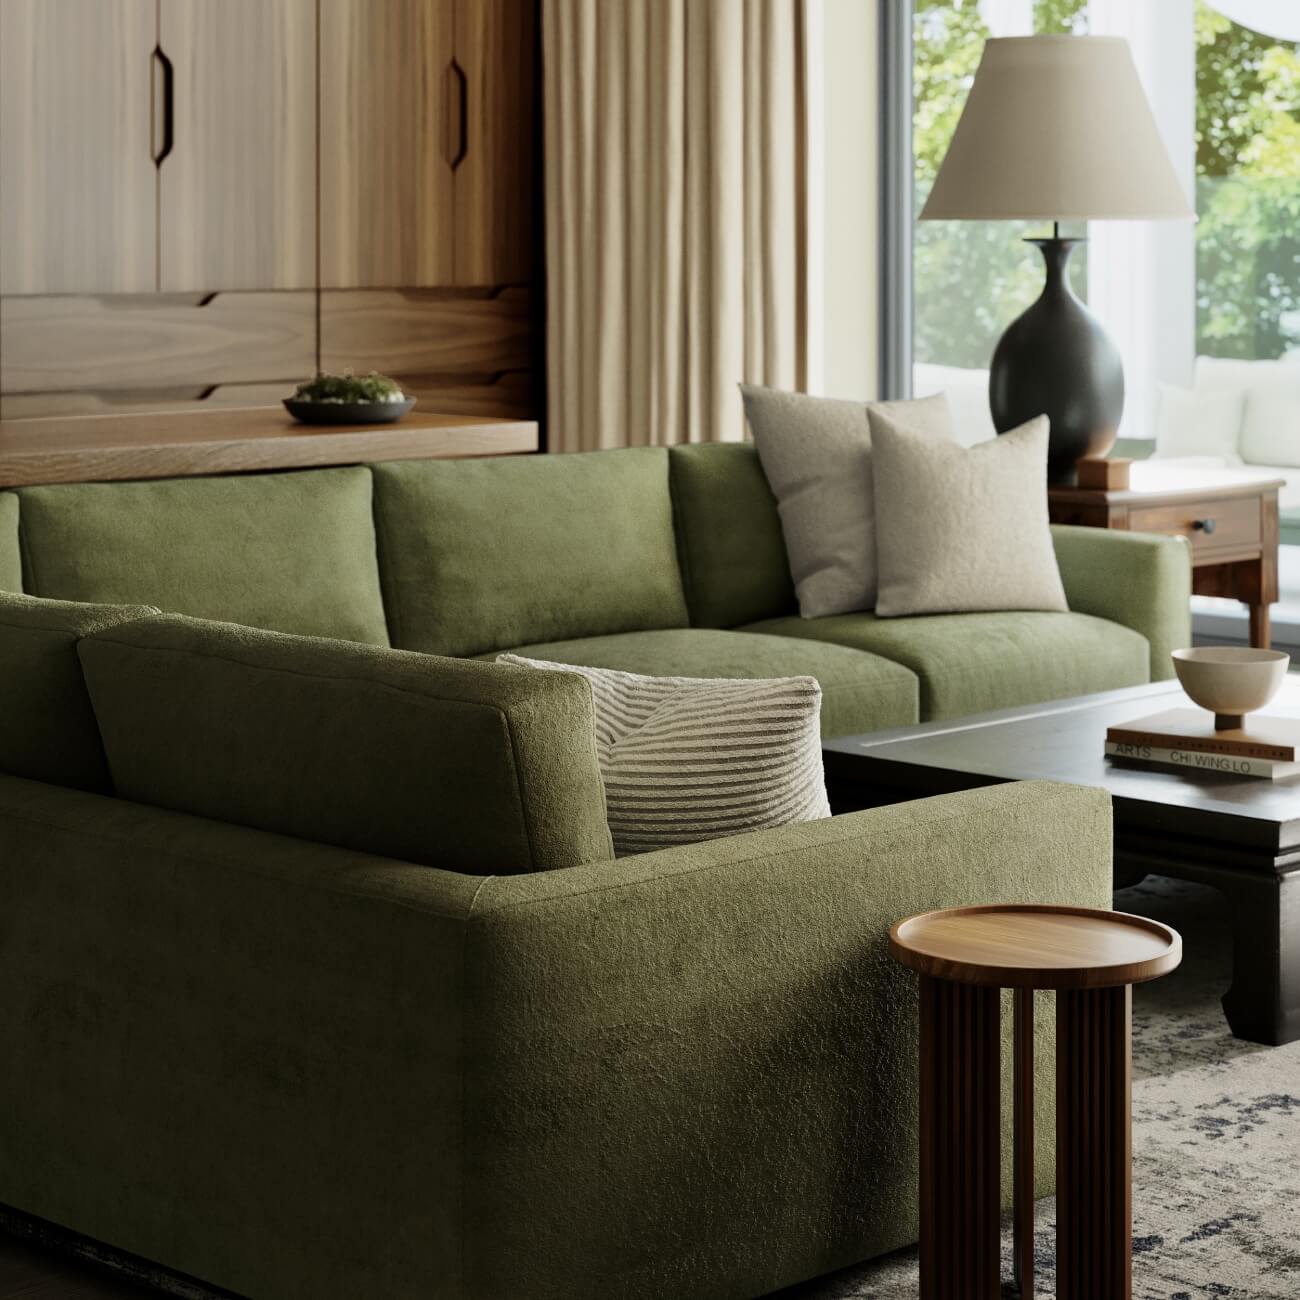 Green modular sofa with cream cushions in an elegant living room